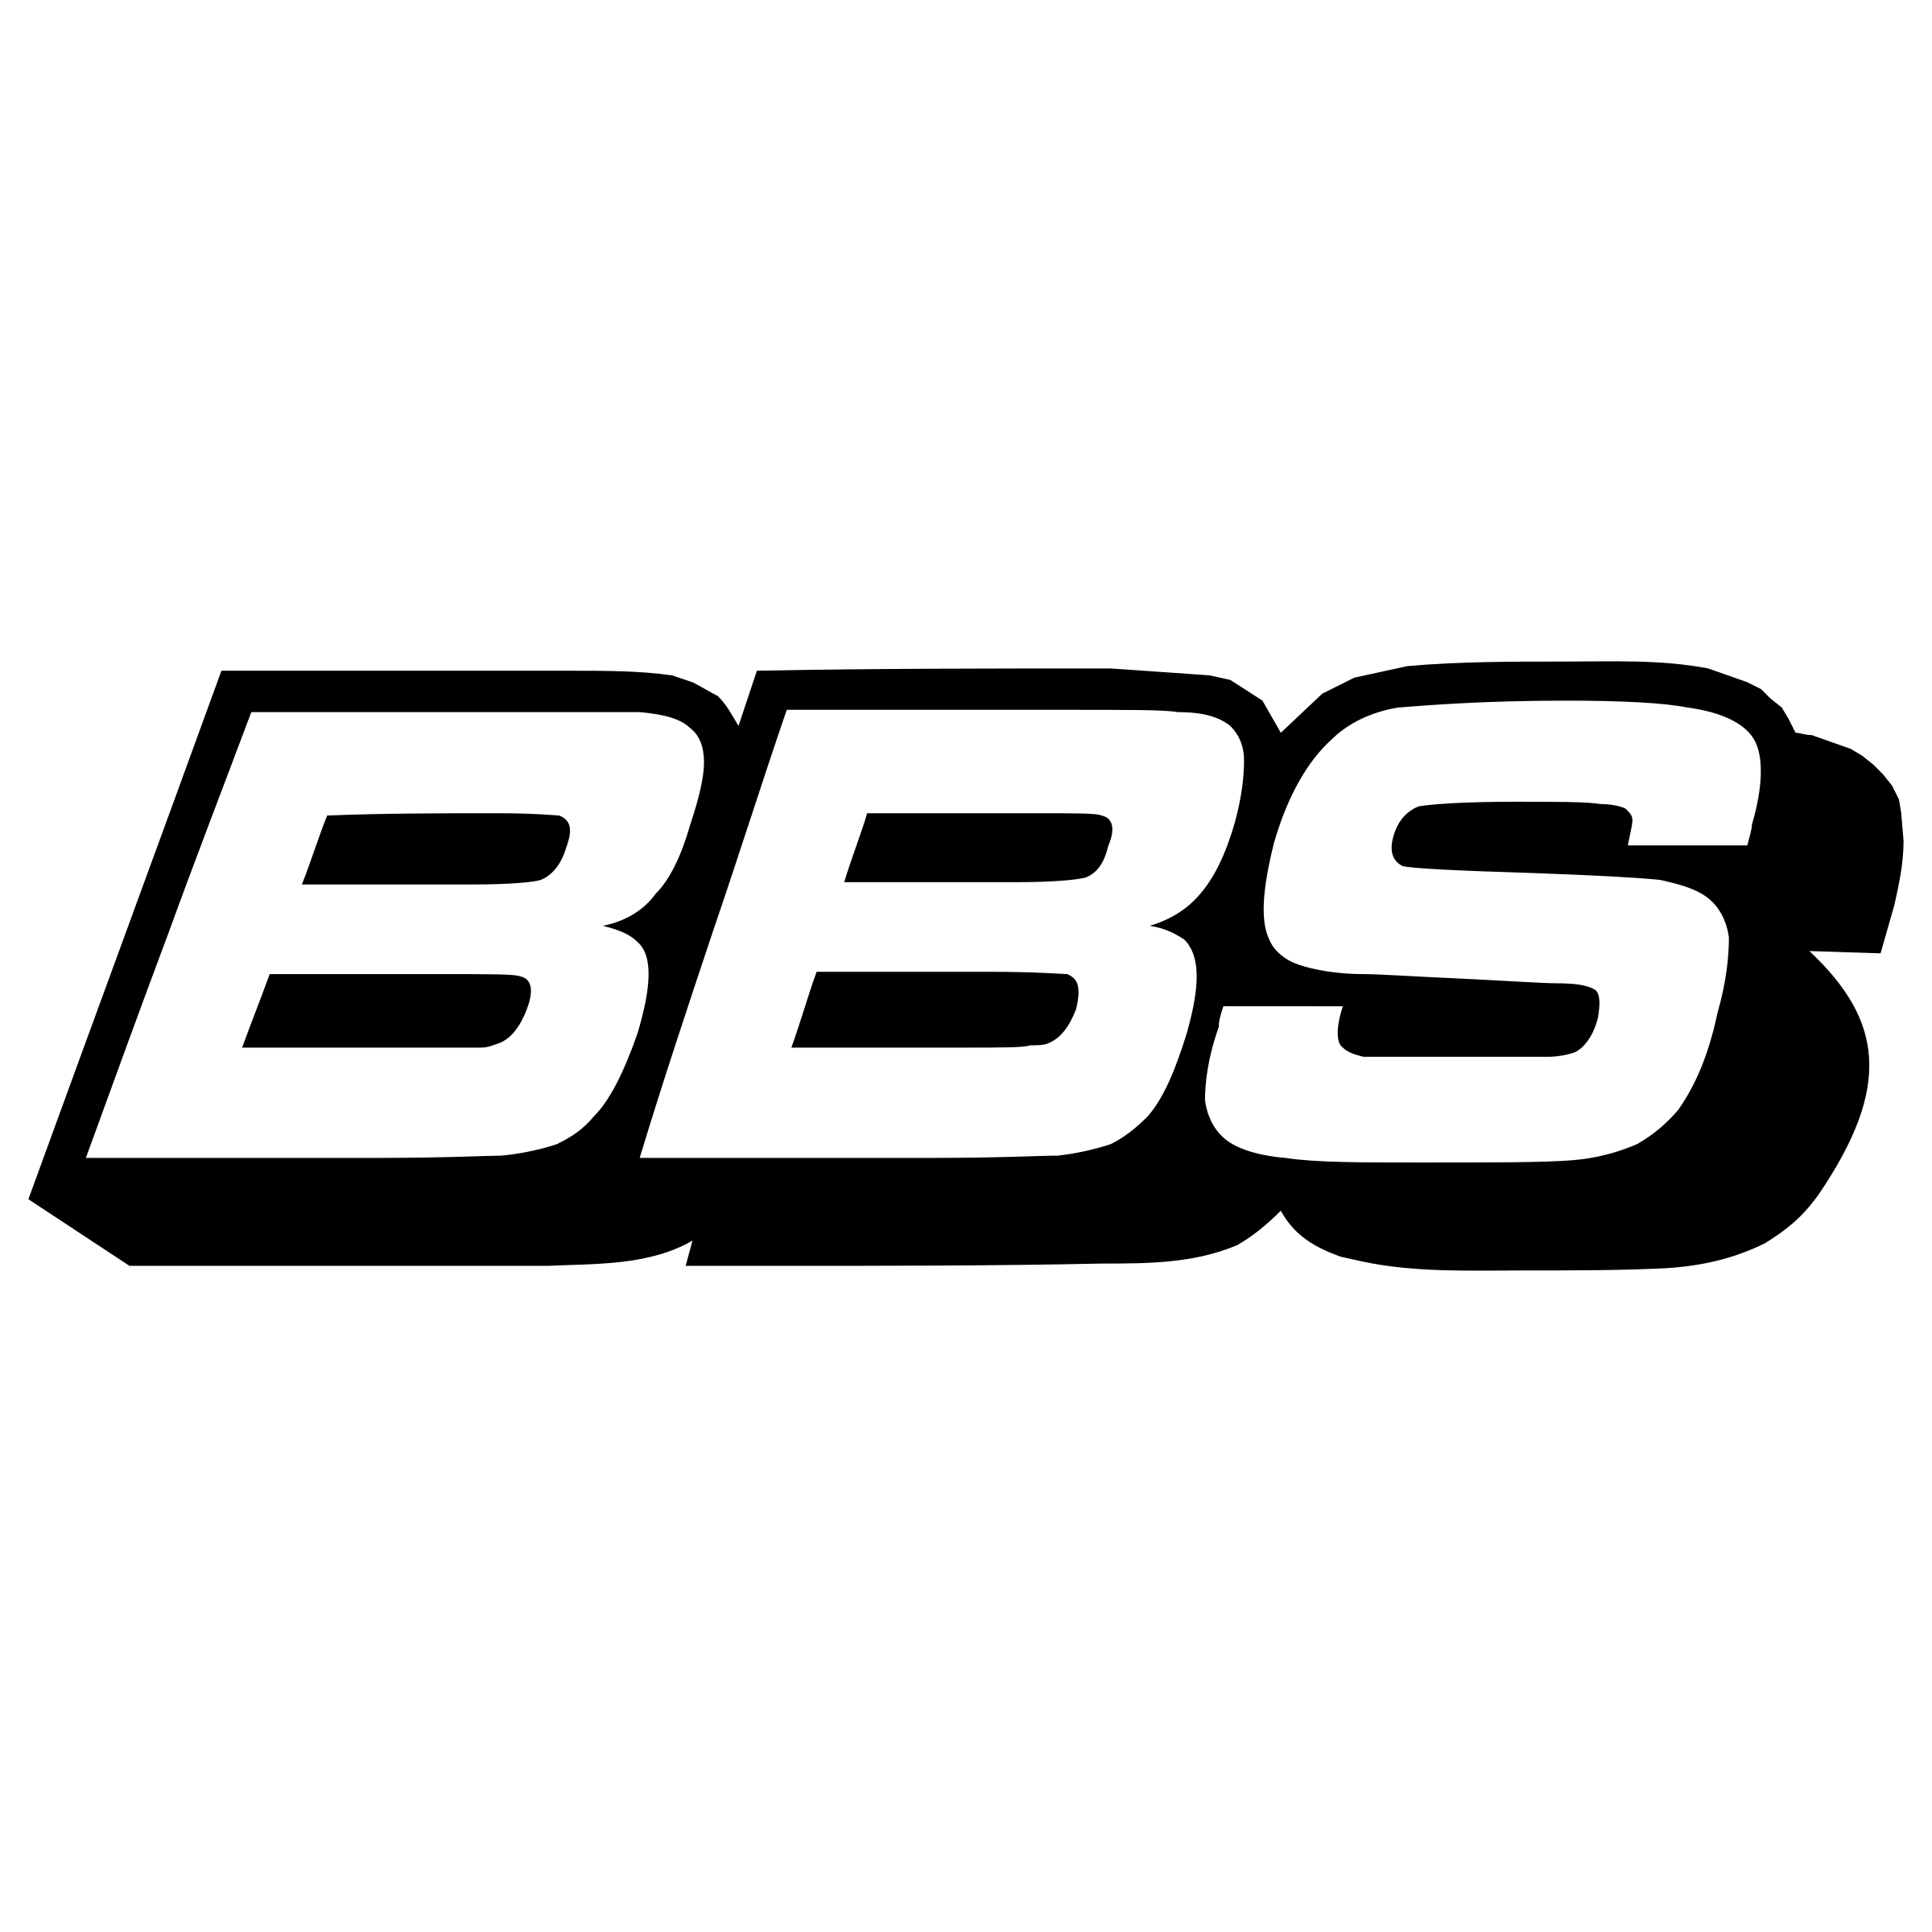 BBS Logo - BBS Logo PNG Transparent & SVG Vector - Freebie Supply